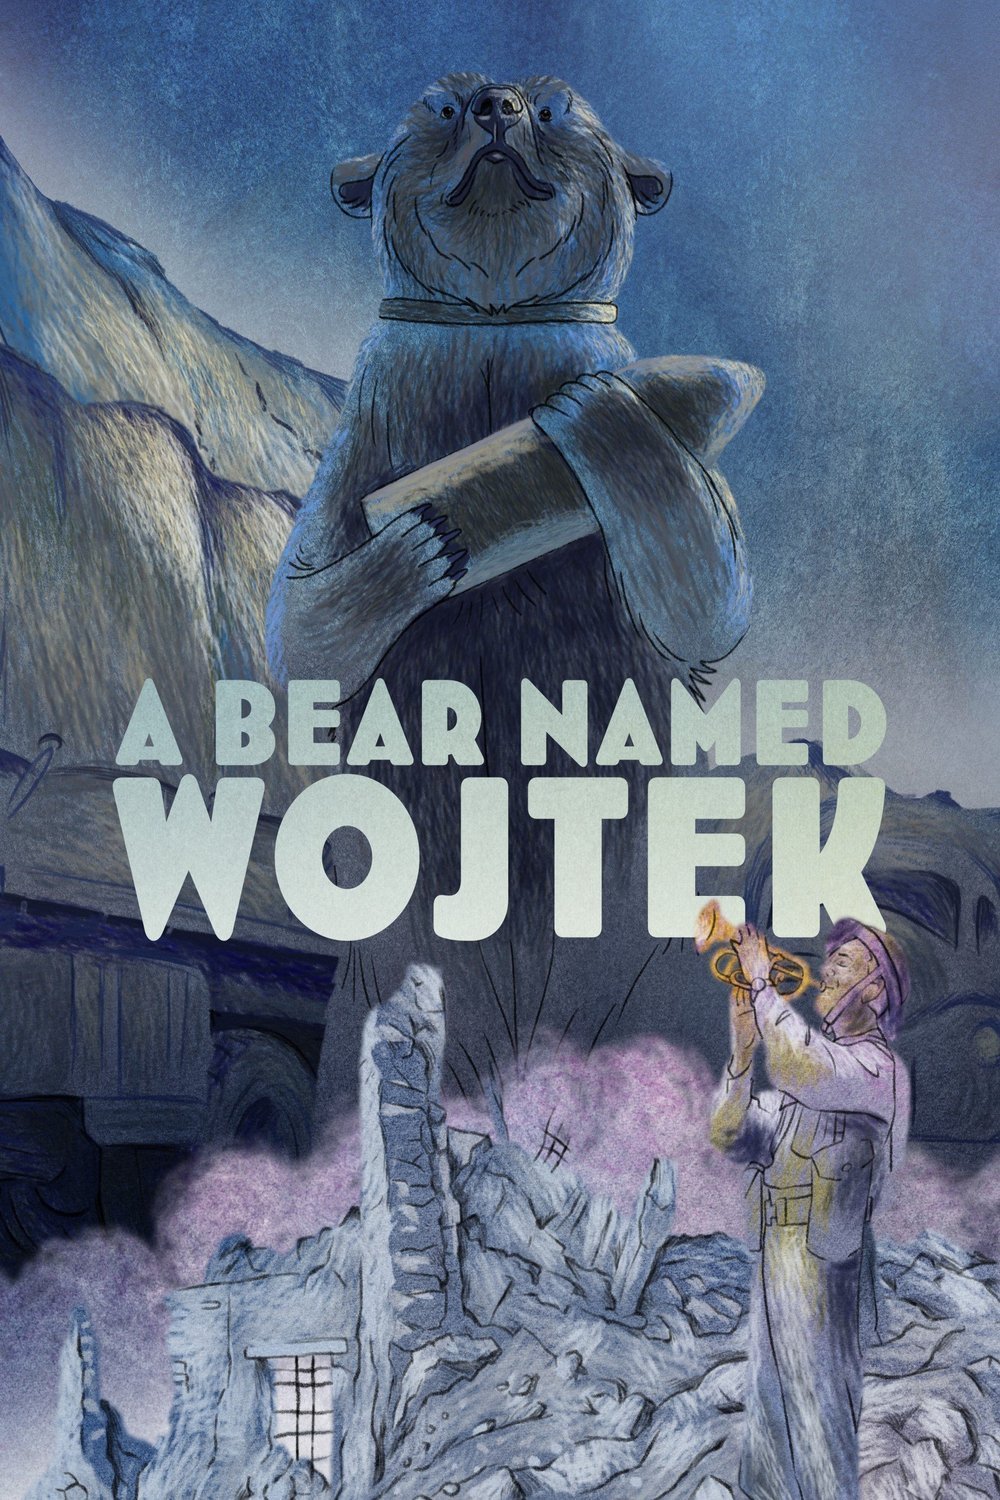 Poster of the movie A Bear Named Wojtek